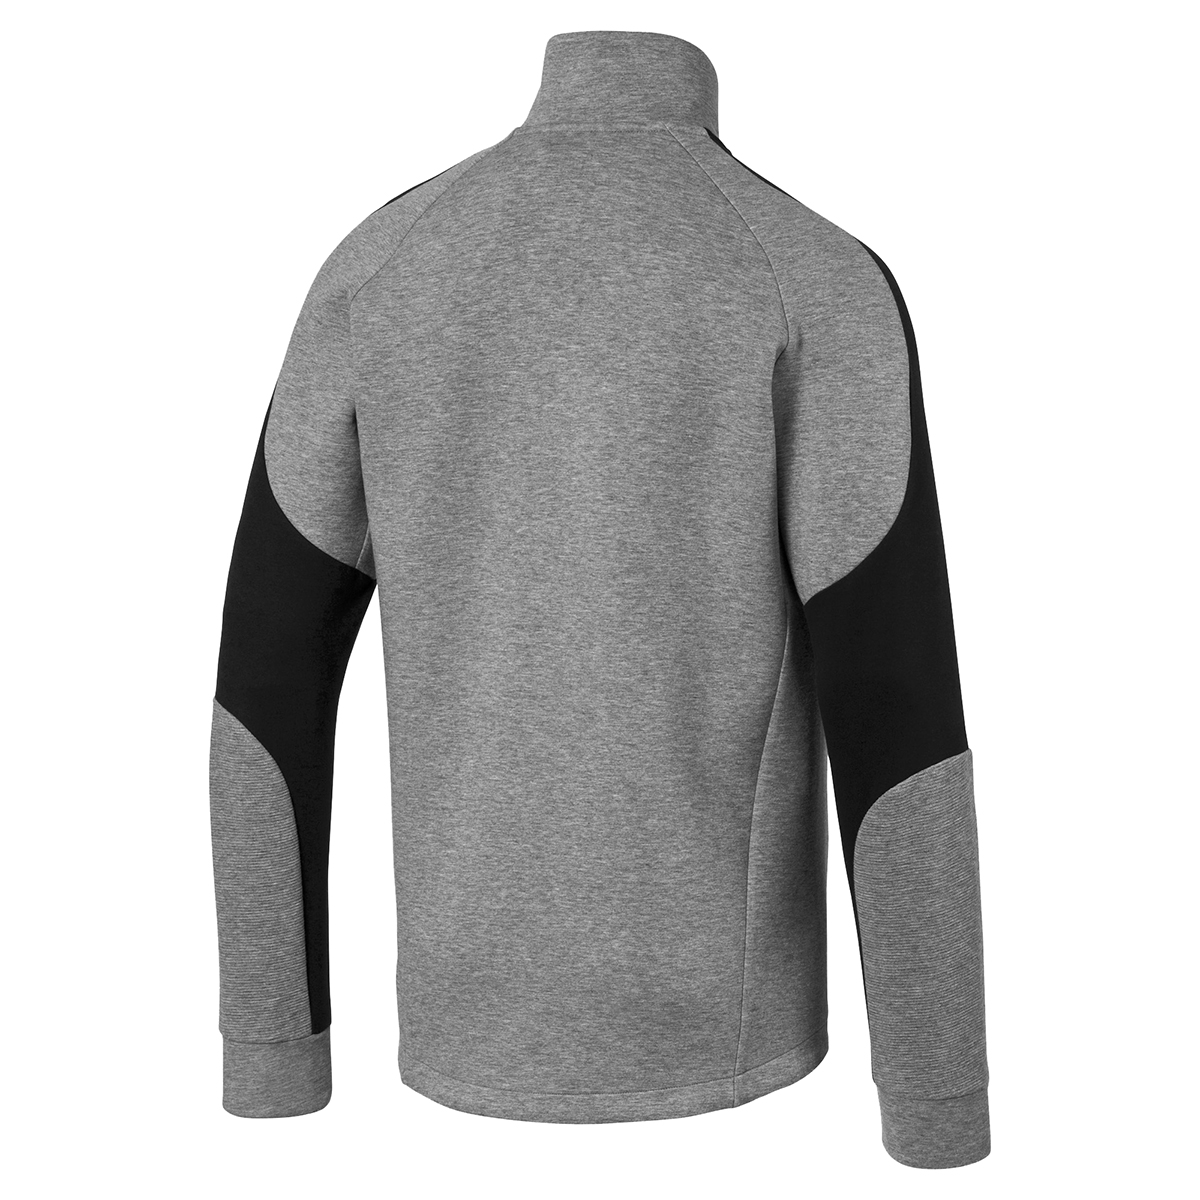 PUMA Herren Evostripe Jacket  Pullover Sweatshirt Trainingsjacke 580095 03 Grau